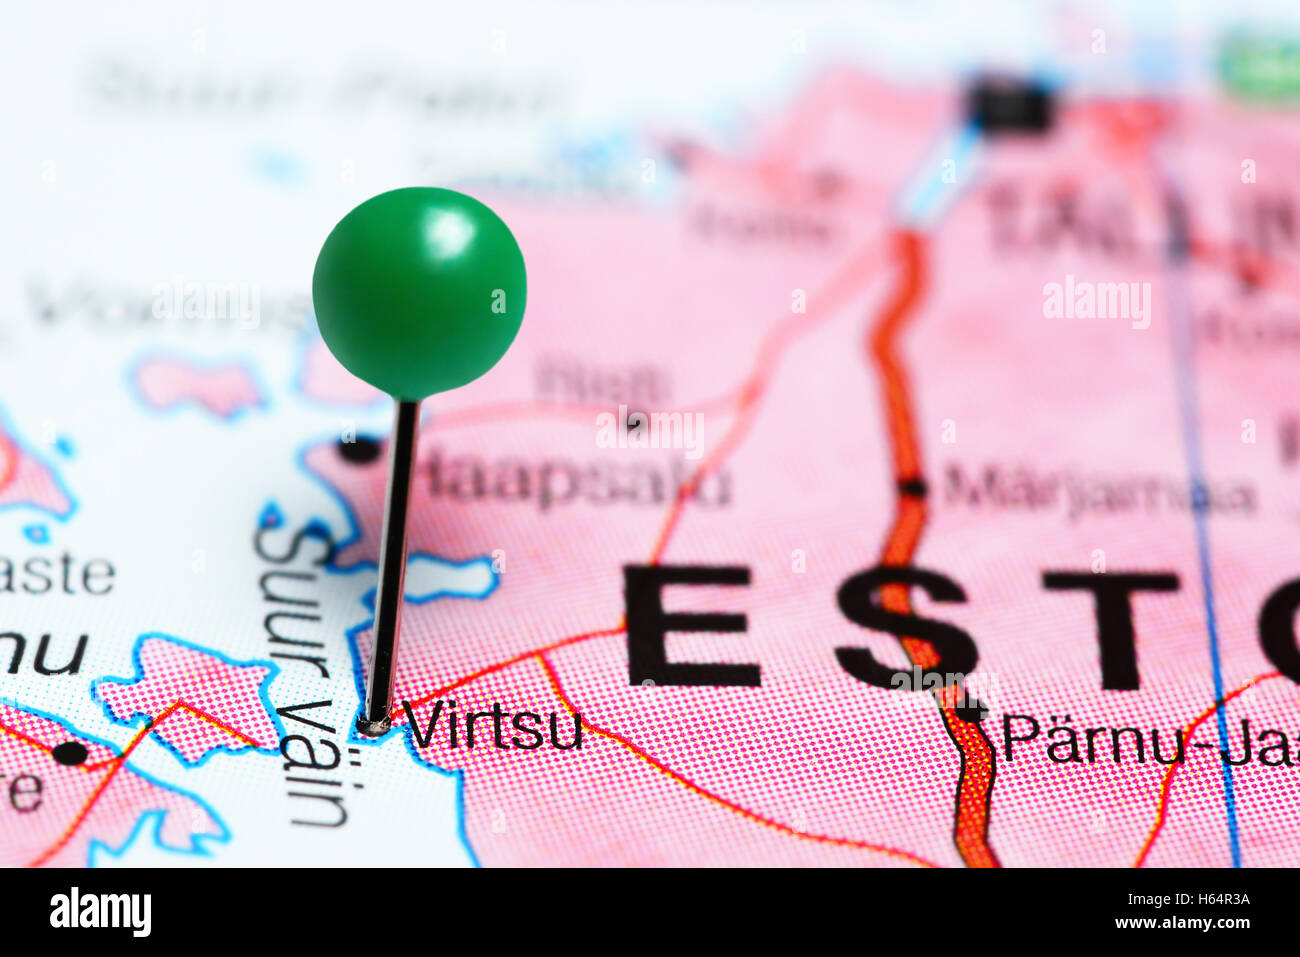 Virtsu pinned on a map of Estonia Stock Photo